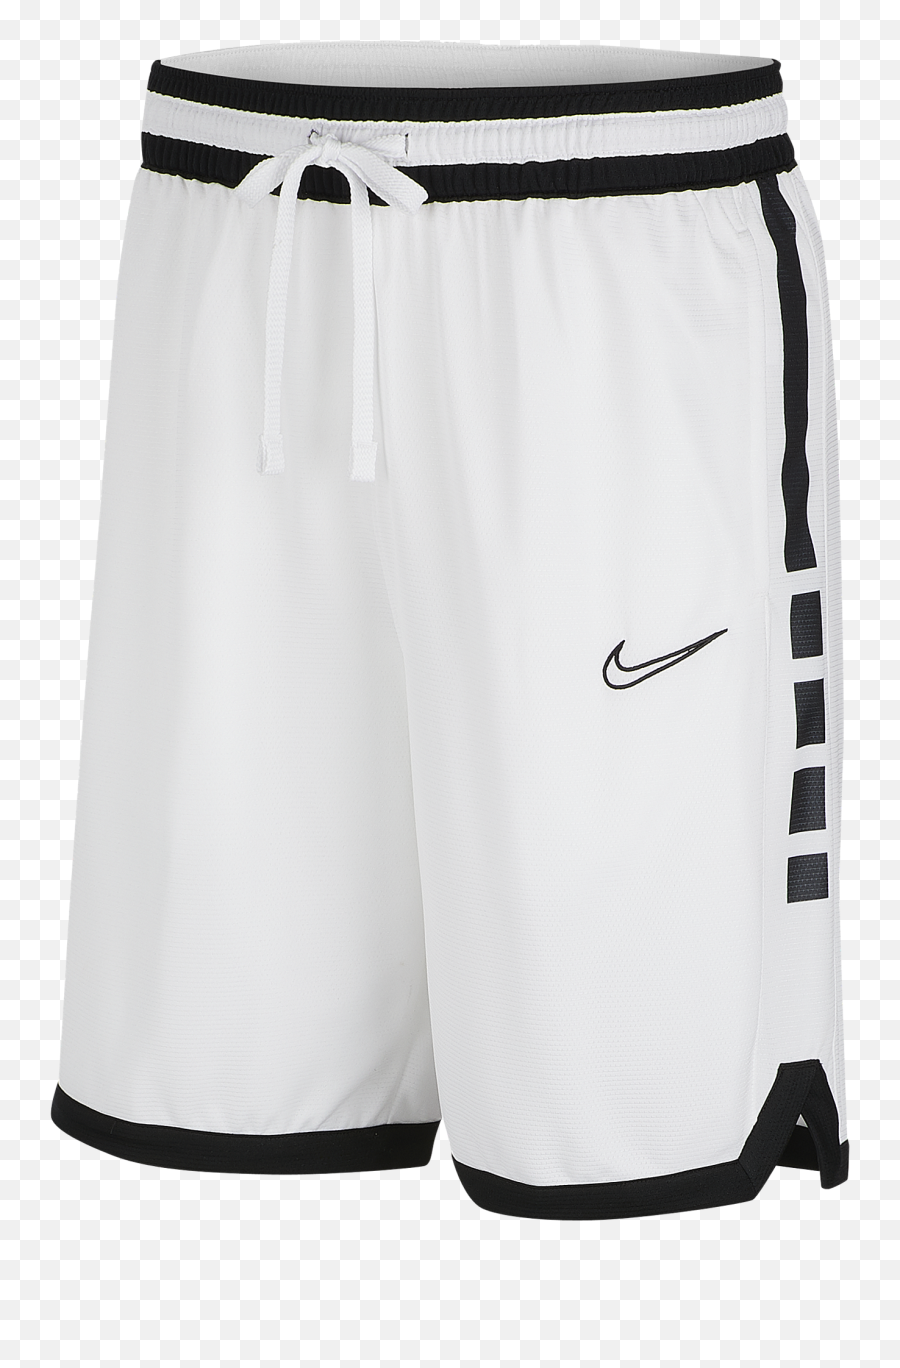 Menu0027s Elite Dri - Fit Basketball Shorts In White Black Black Rugby Shorts Png,Nike Icon Mesh Shorts